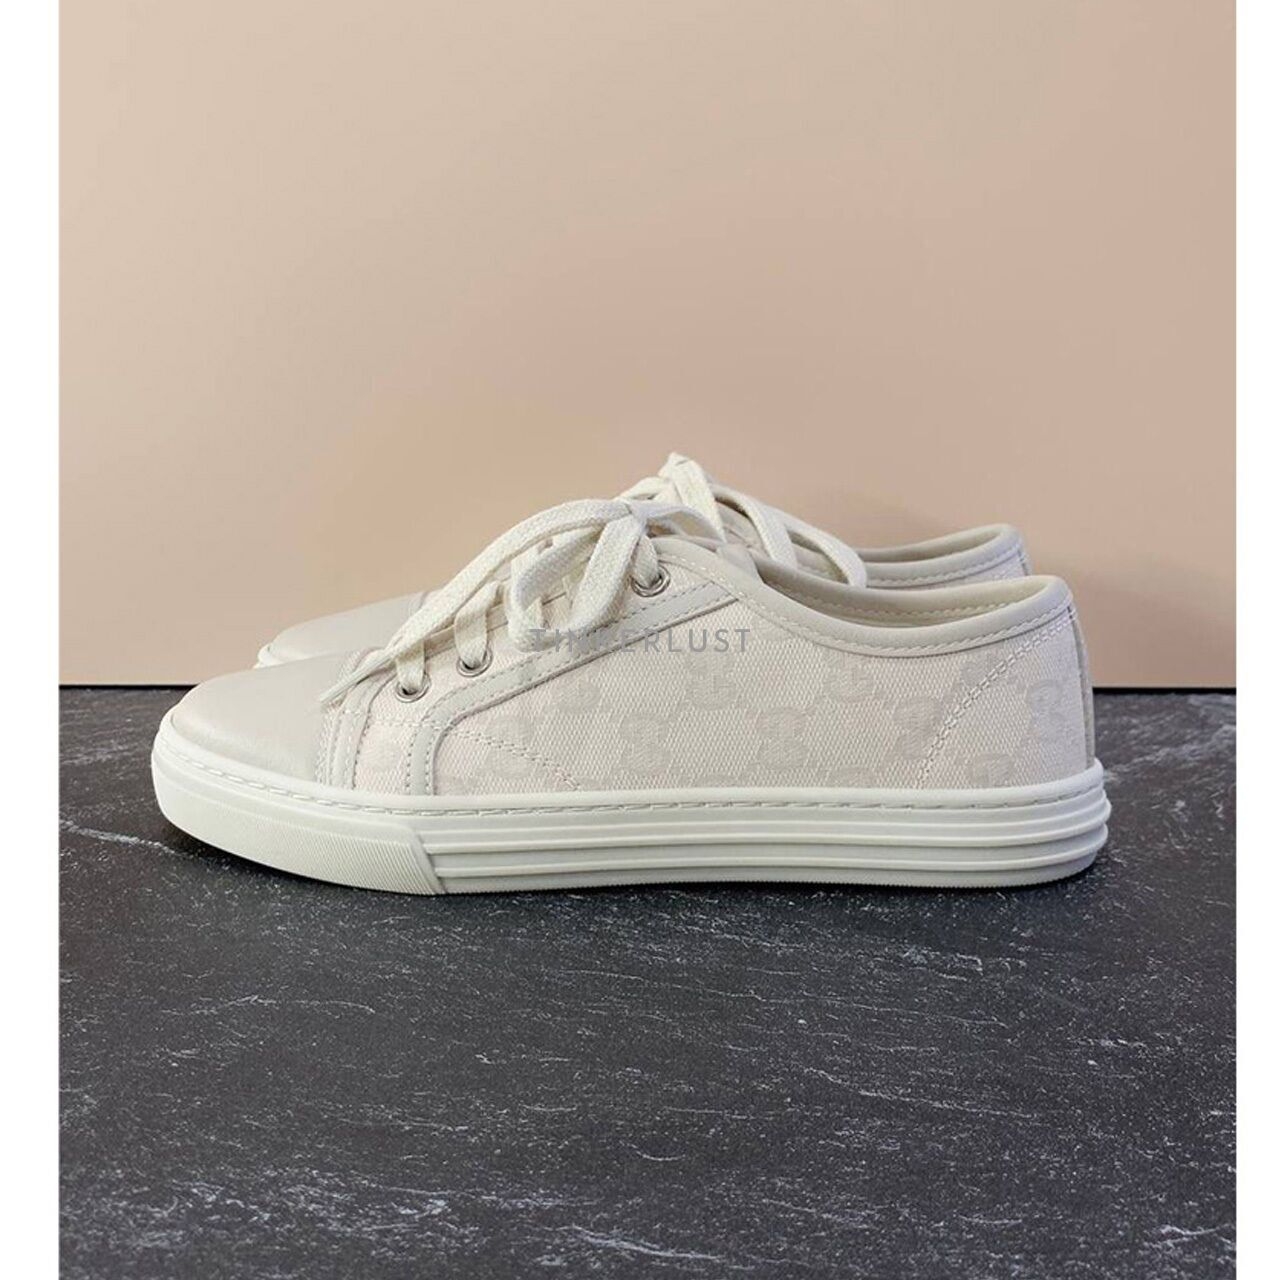 Gucci White GG Canvas Sneakers